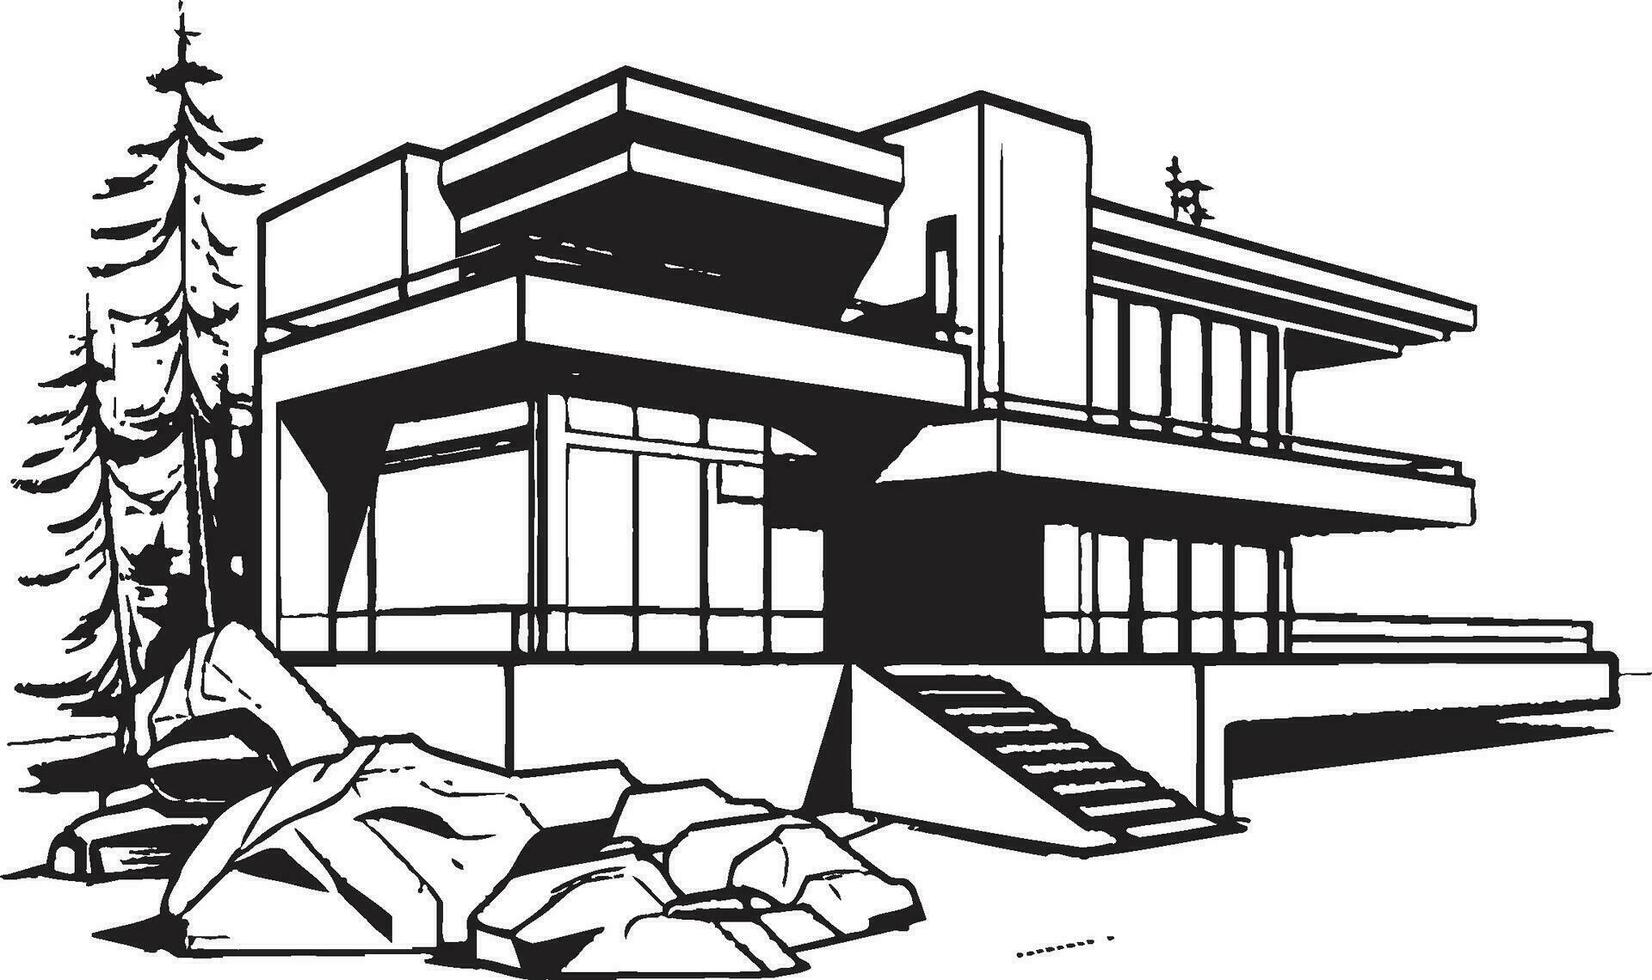 Dual Living Sketch Vector Logo for Duplex House Concept Pair Home Sketch Concept Duplex Design Vector Icon